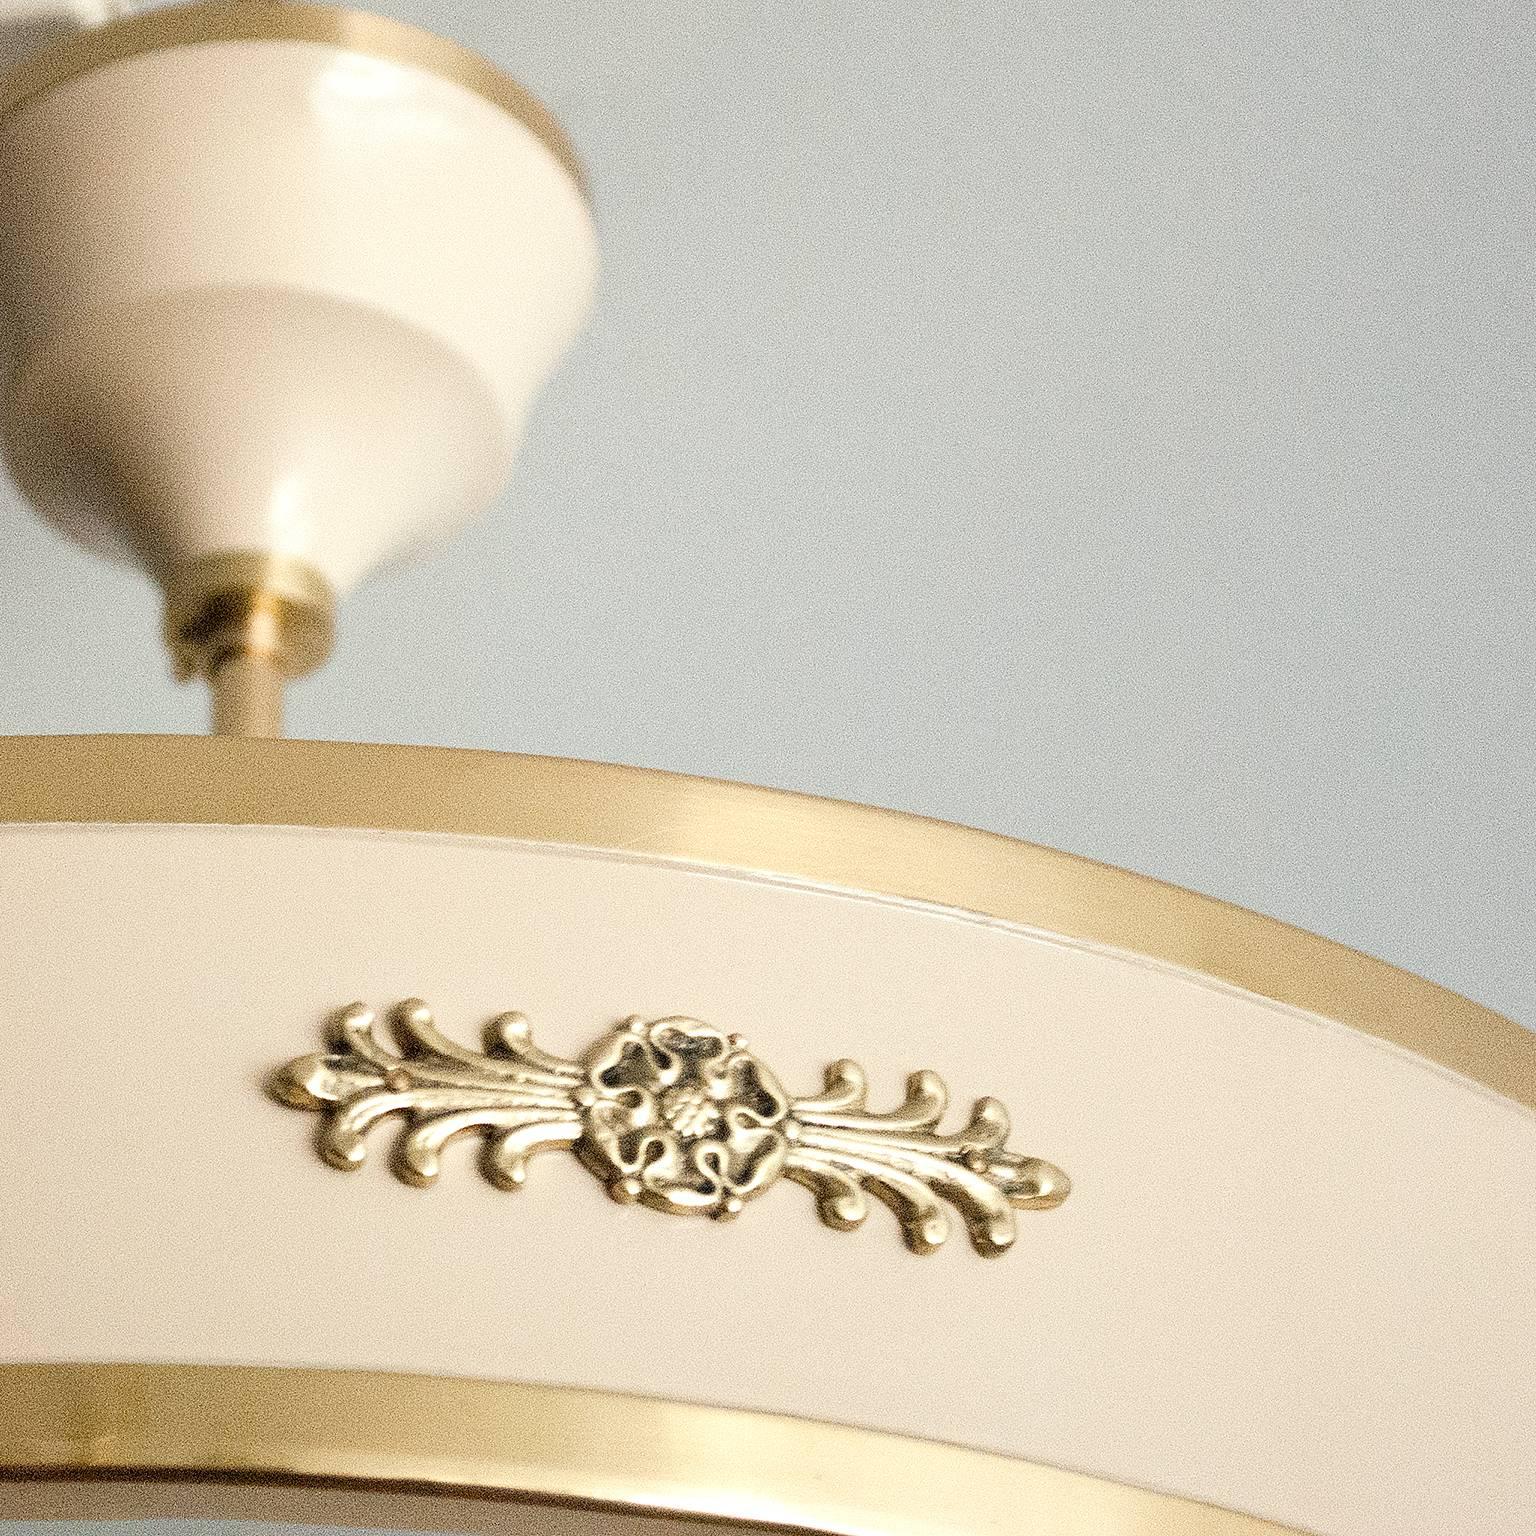 20th Century Scandinavian Modern, Art Deco Ceiling Fixture Lacquered with Brass Details